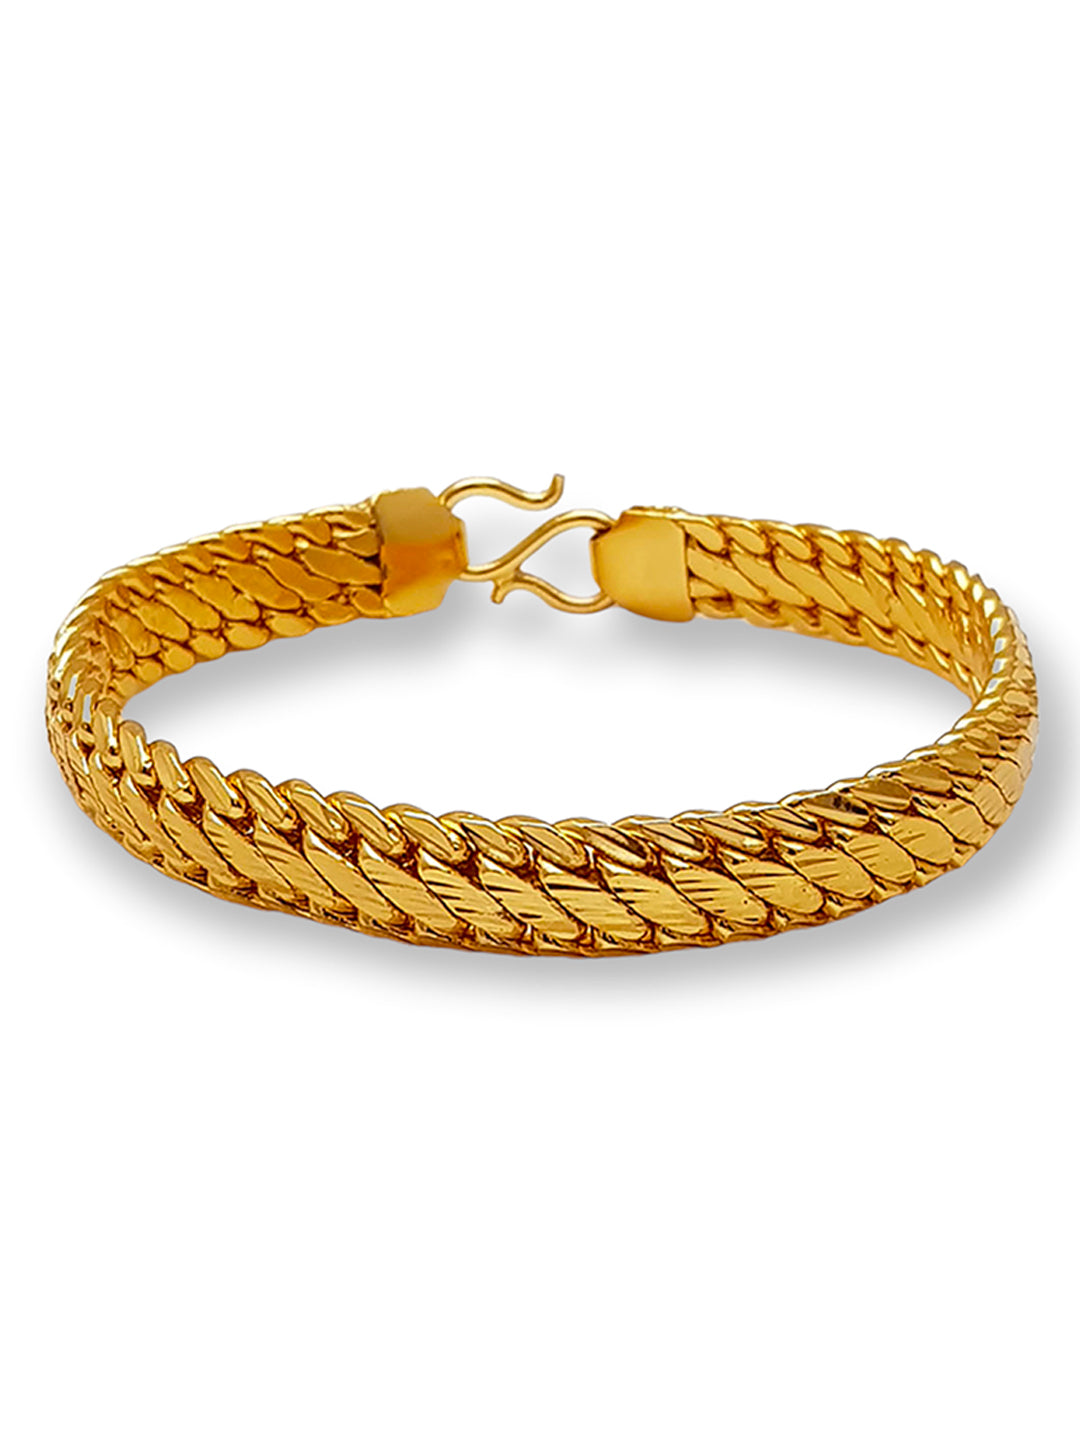 CZ 18K Gold Stainless Steel Double Foxtail Link Bracelet | Man gold bracelet  design, Gold plated bracelets, Mens gold bracelets